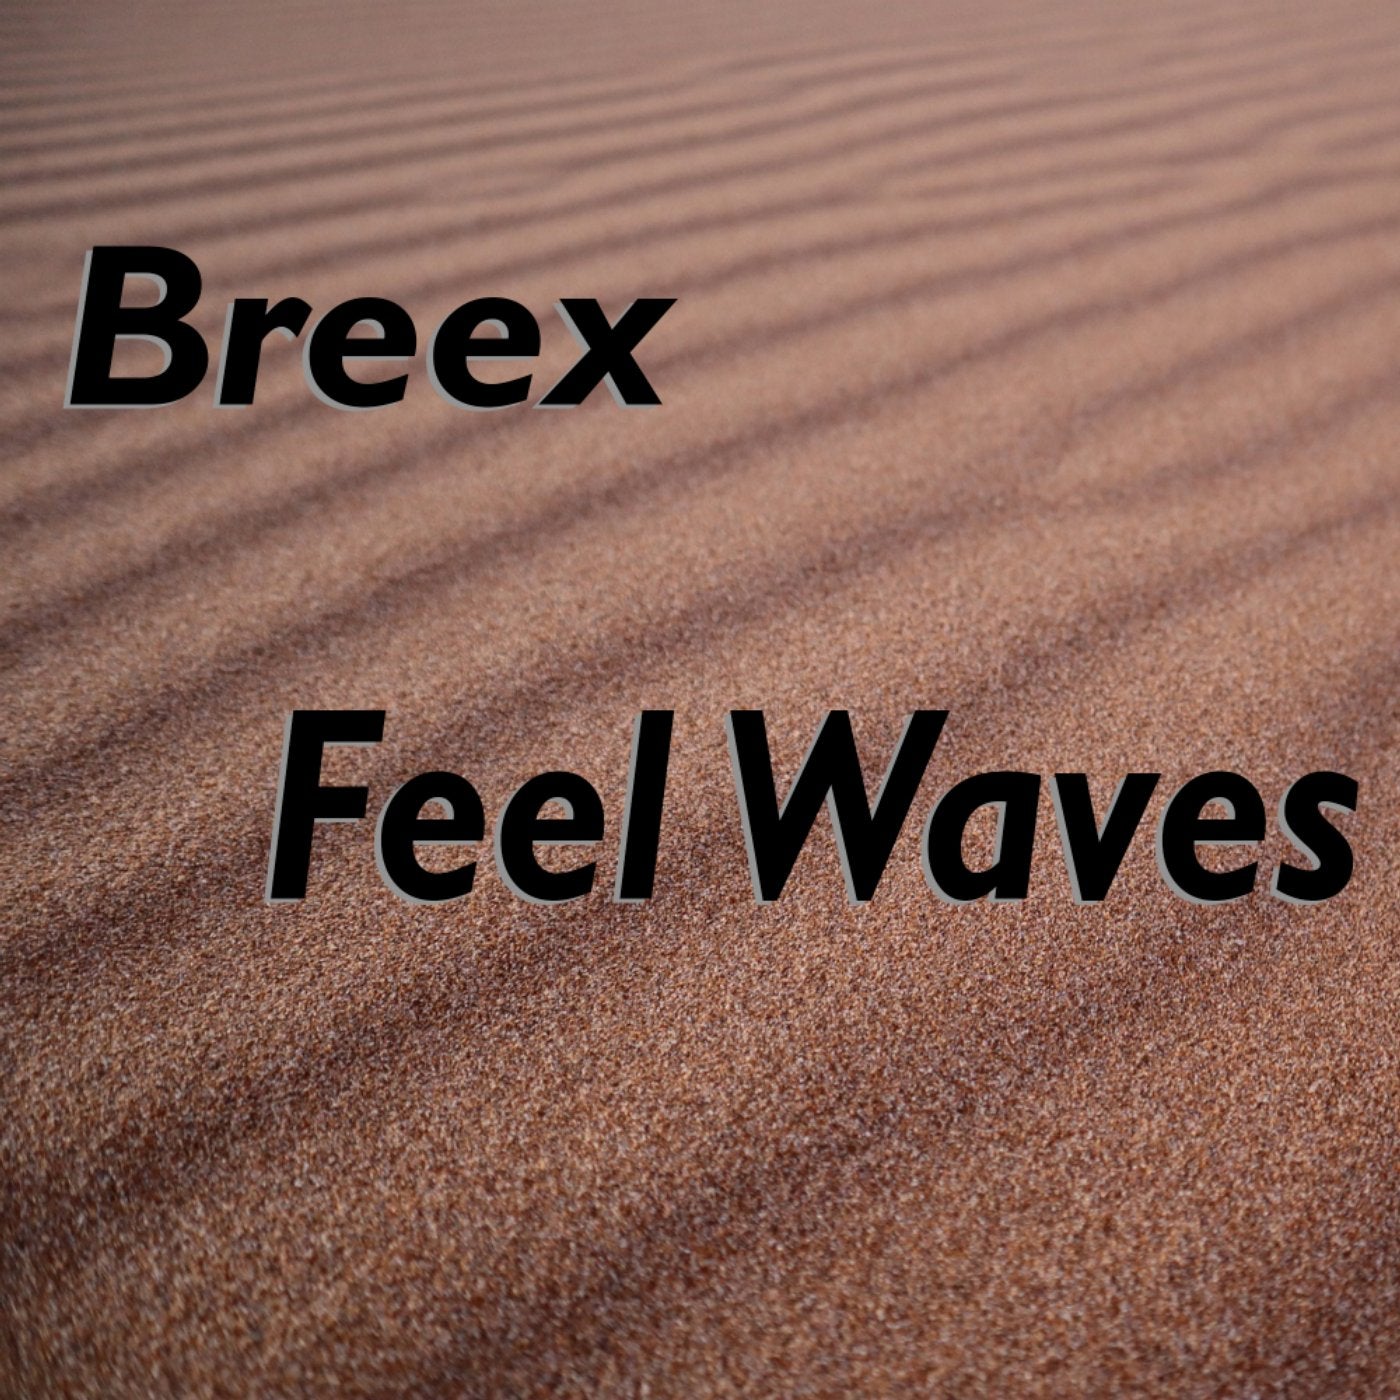 Feel Waves